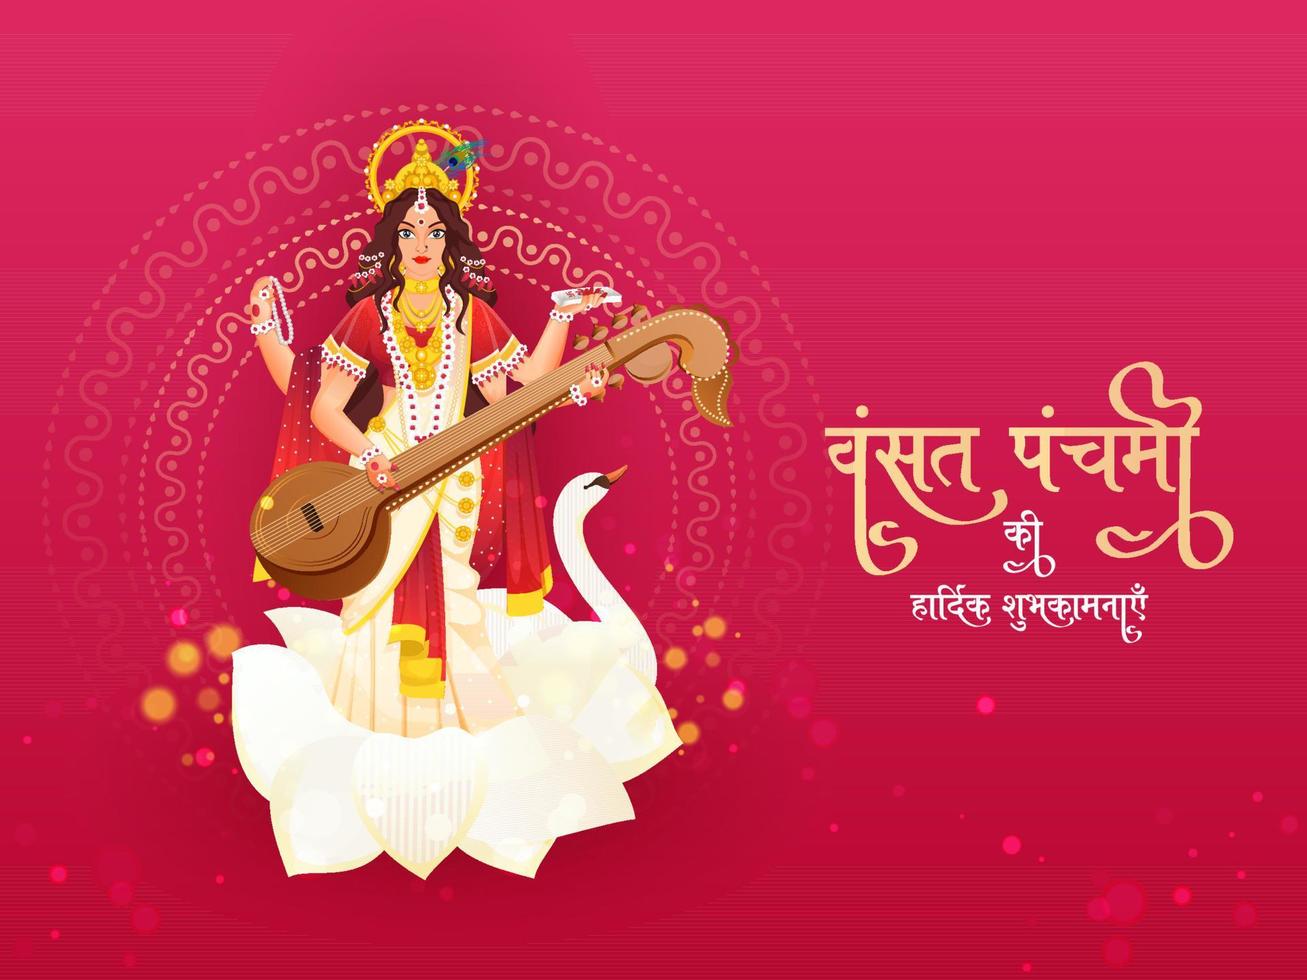 Happy Vasant Panchami Text Written Hindi Language With Beautiful Goddess Saraswati Character On Dark Pink Background. vector